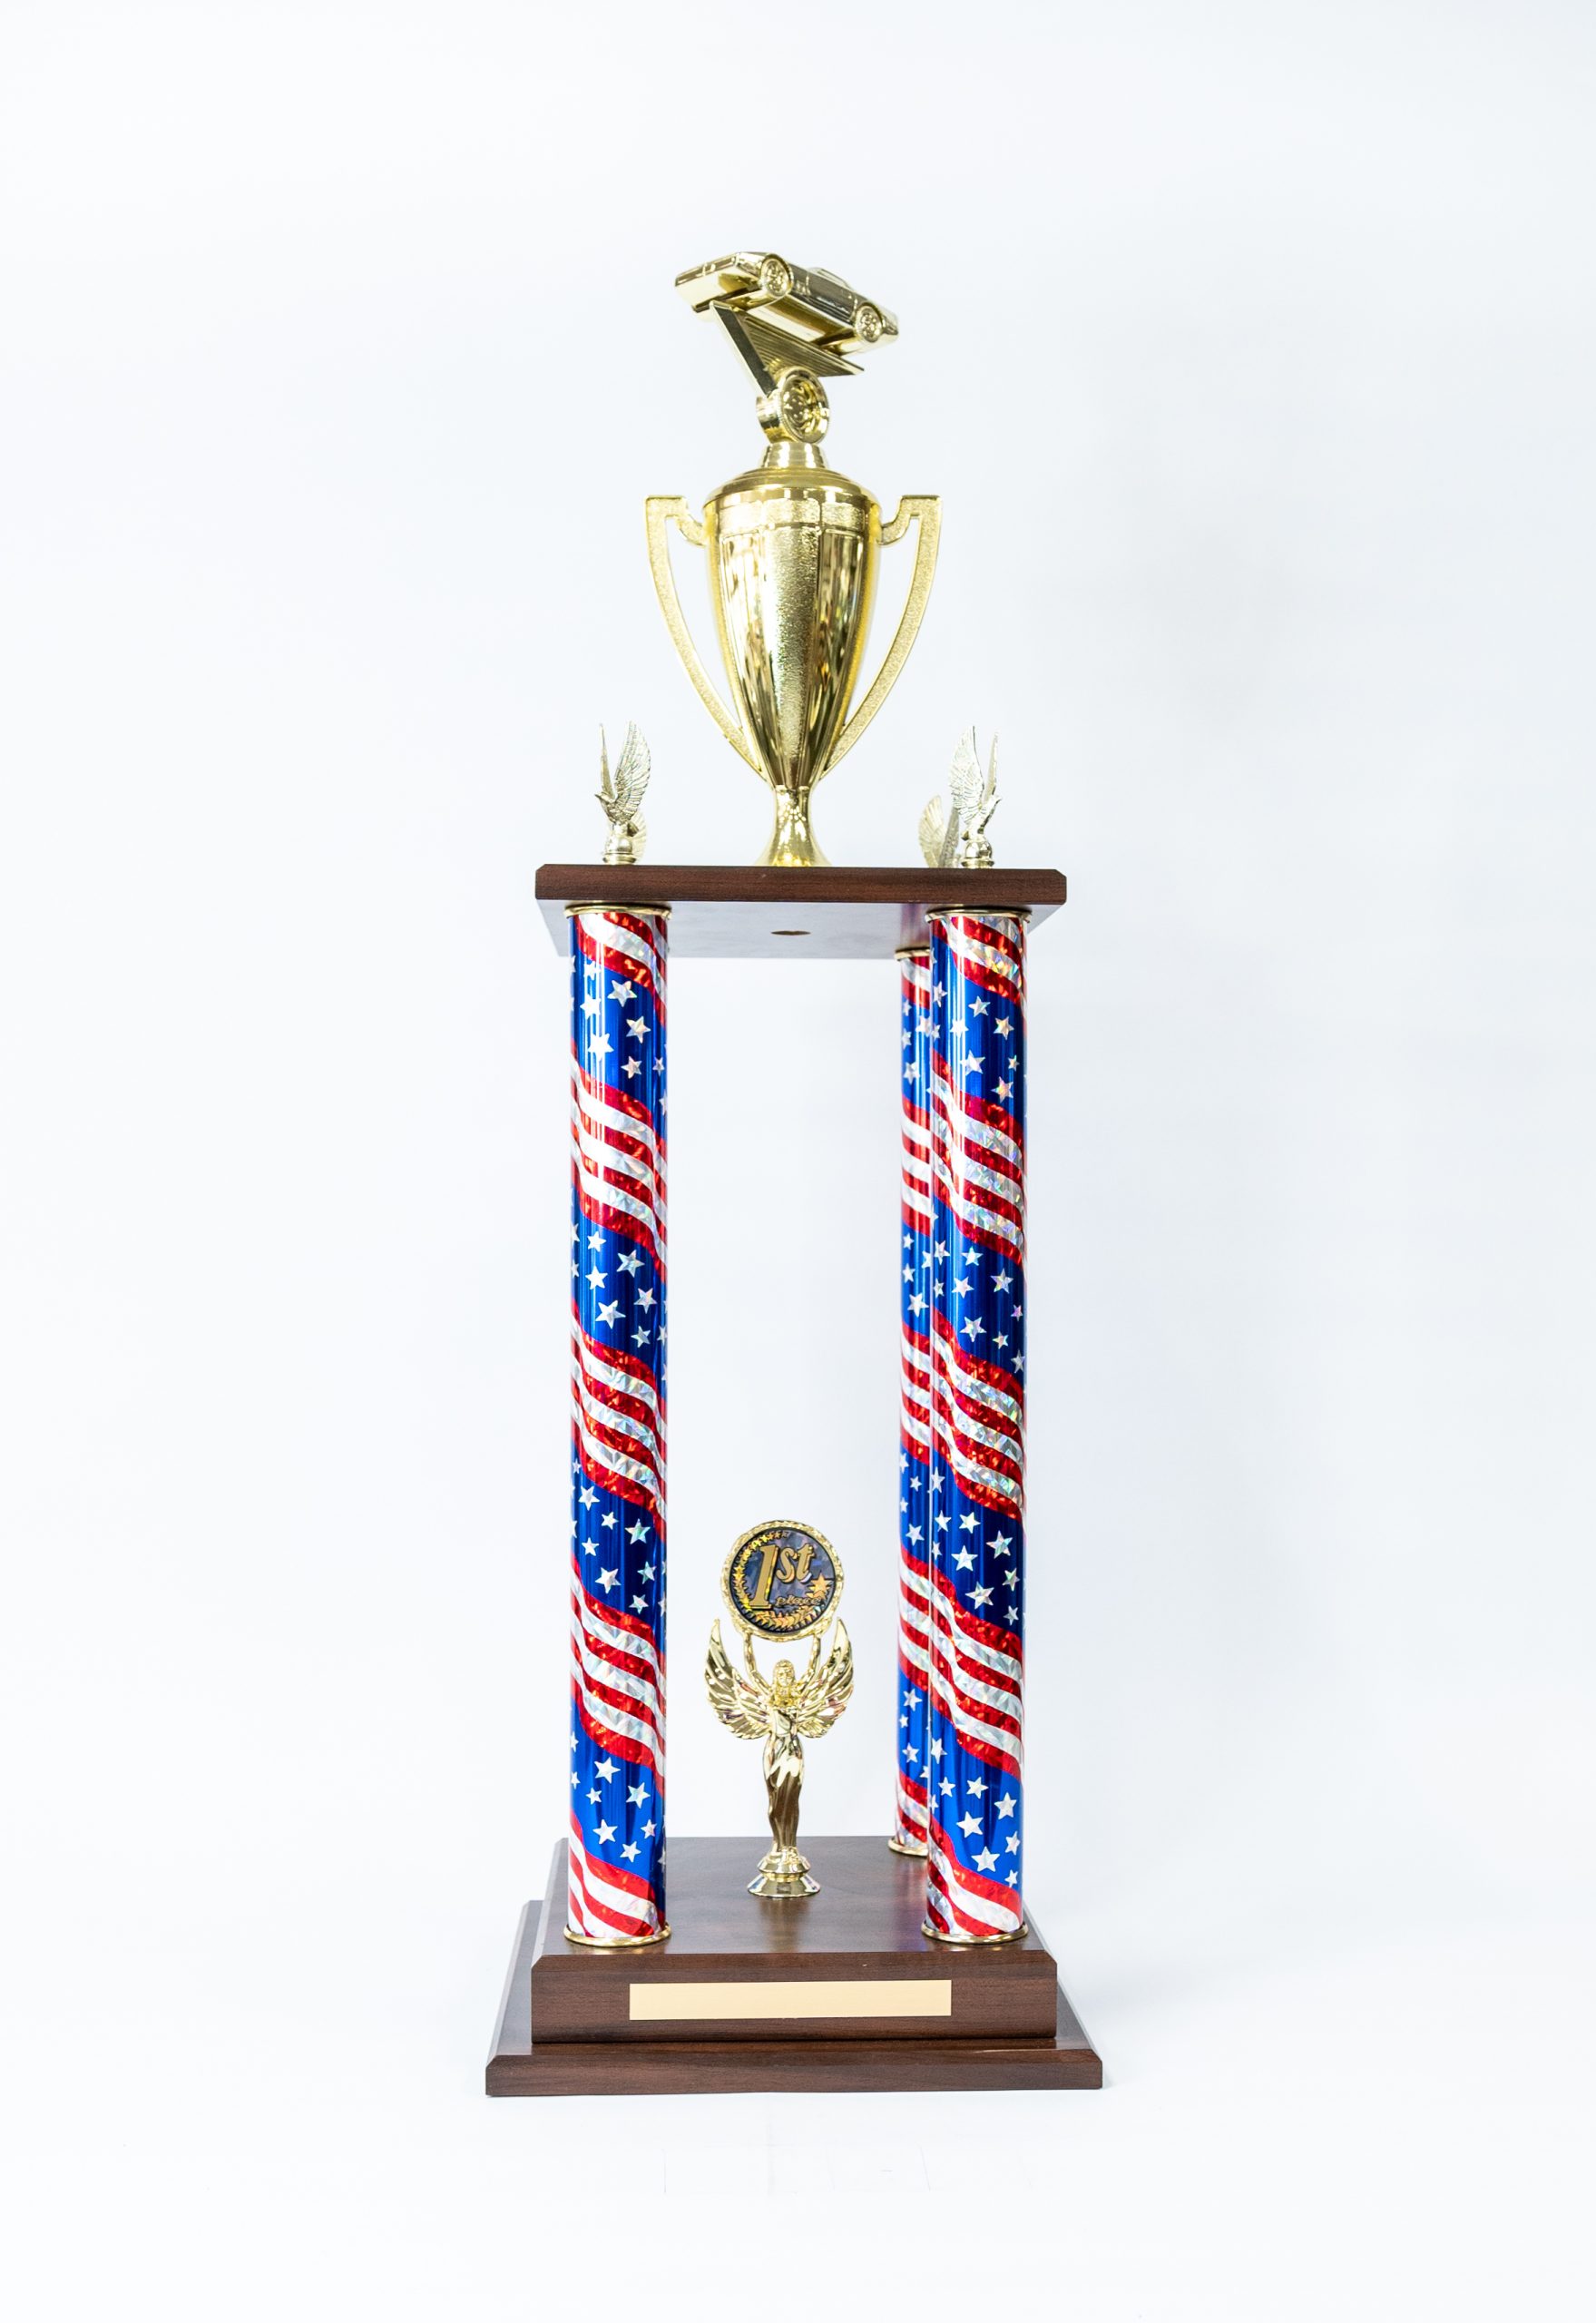 BMX FREE Engraving School trophy table tennis Multi sport Award Cup football 